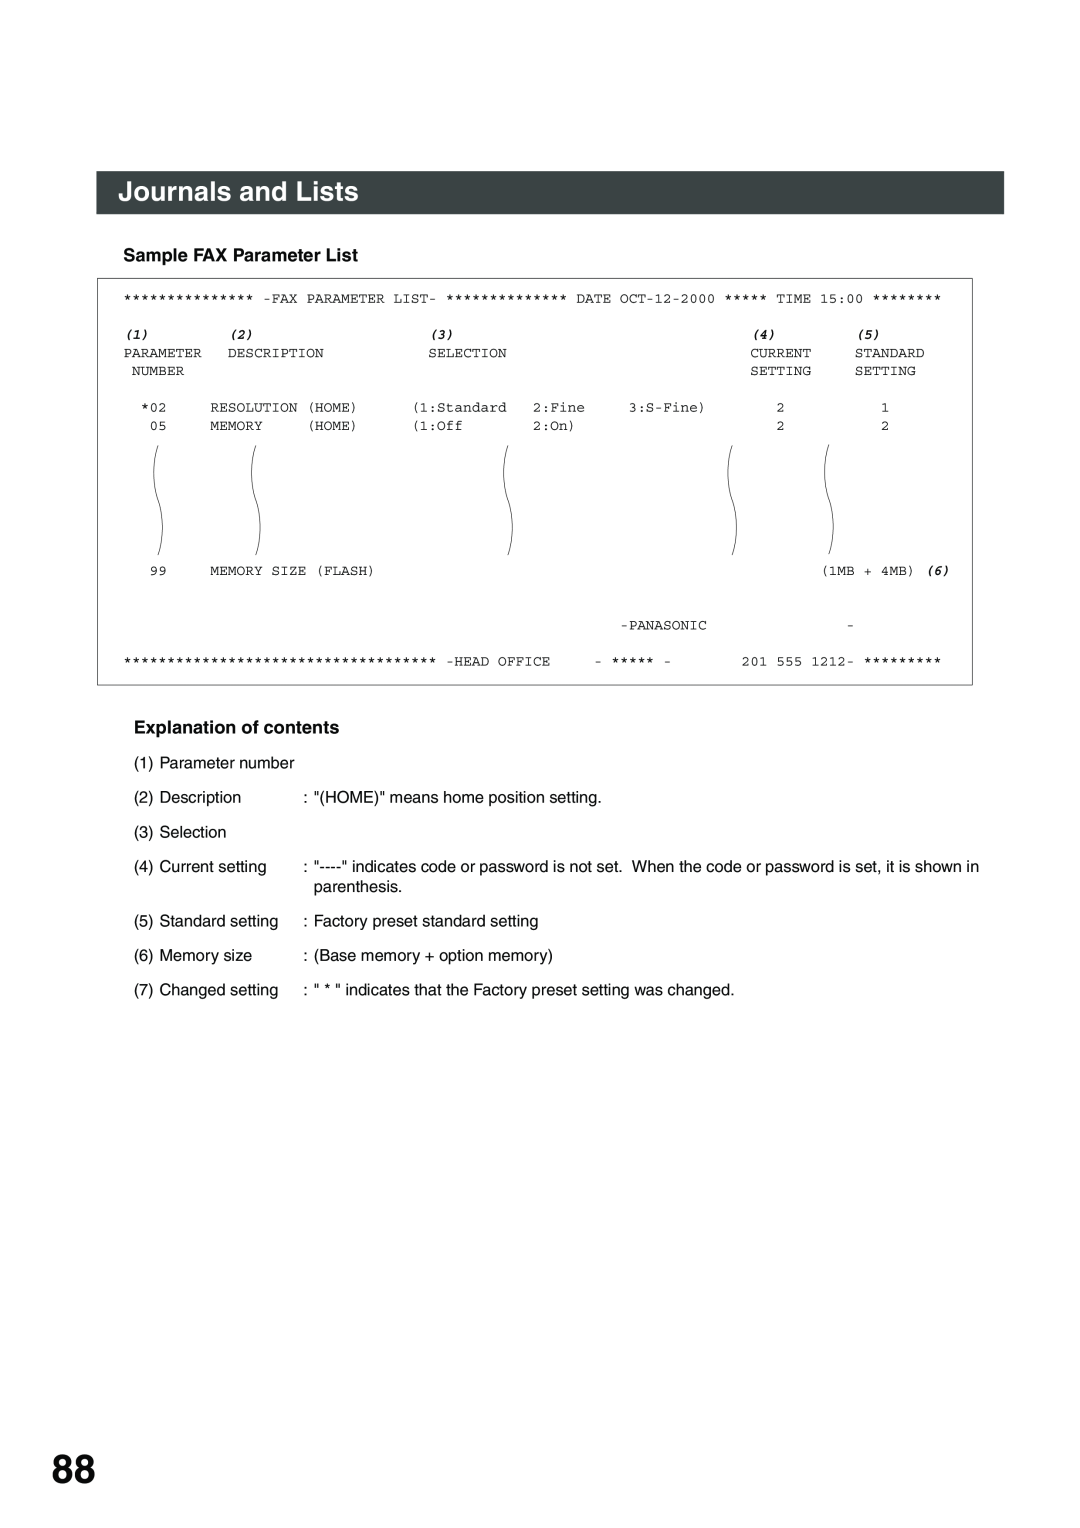 Panasonic DP-135FP appendix Journals and Lists, Parameter number 